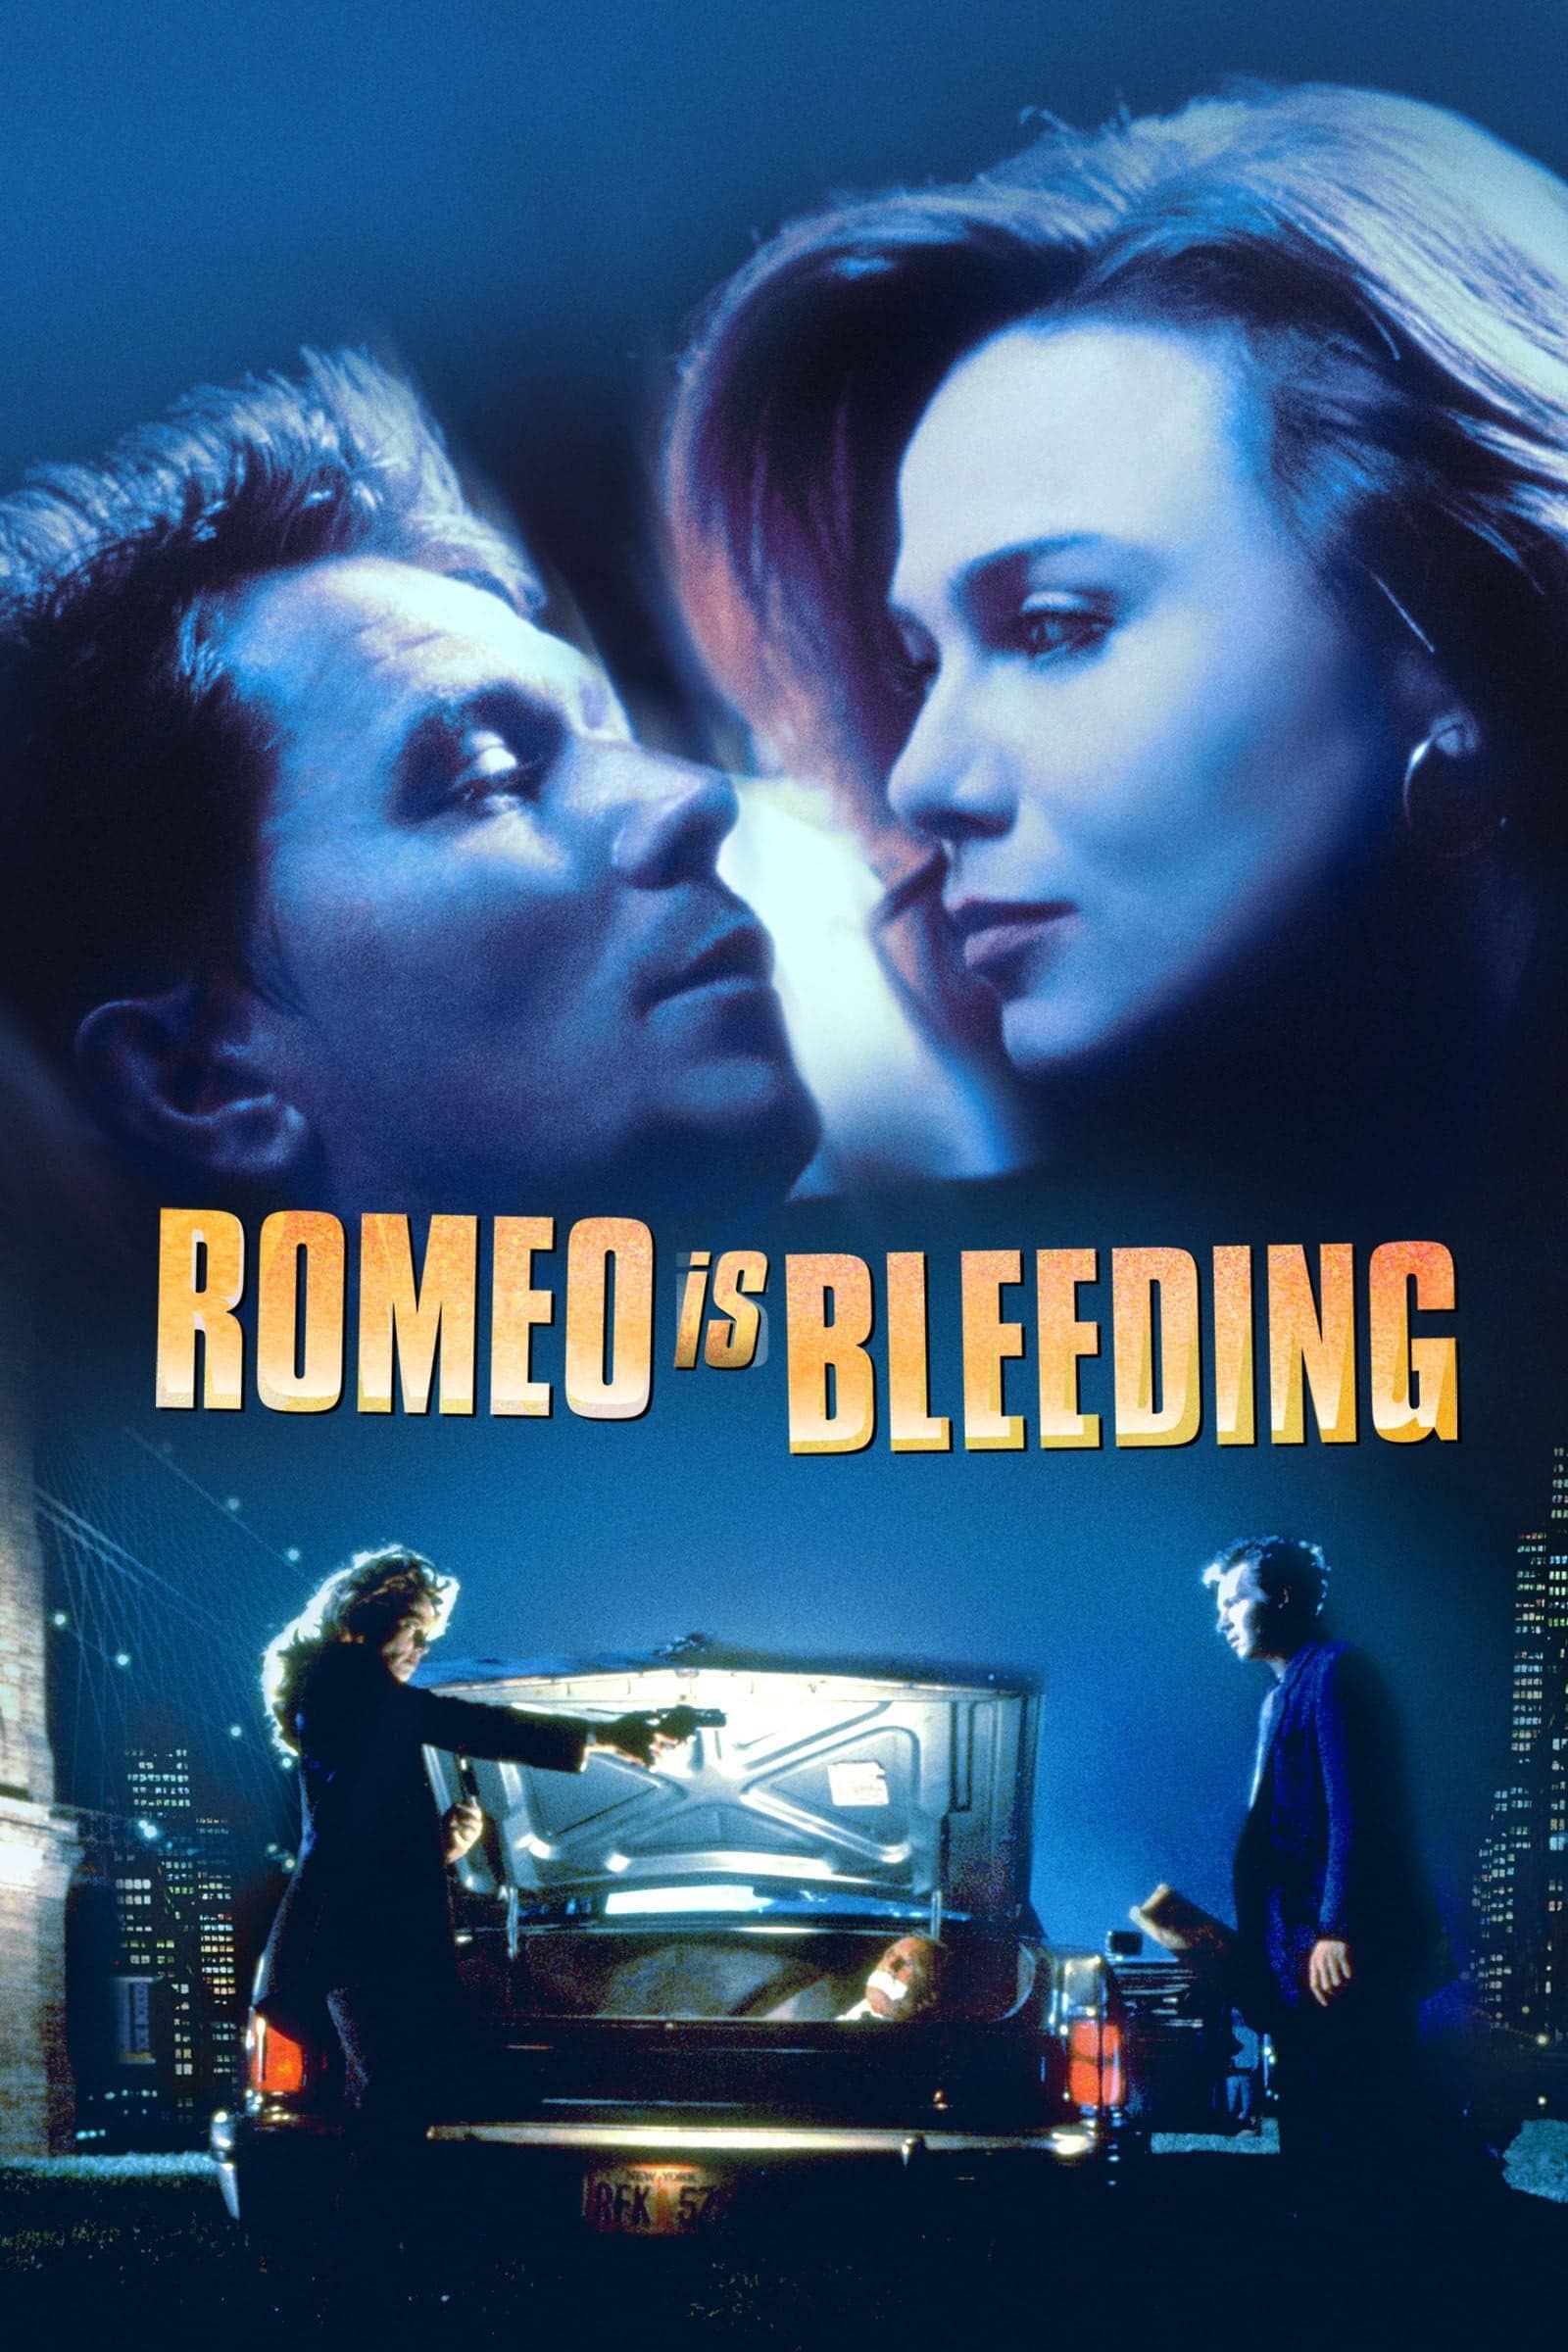 Plakat von "Romeo Is Bleeding"